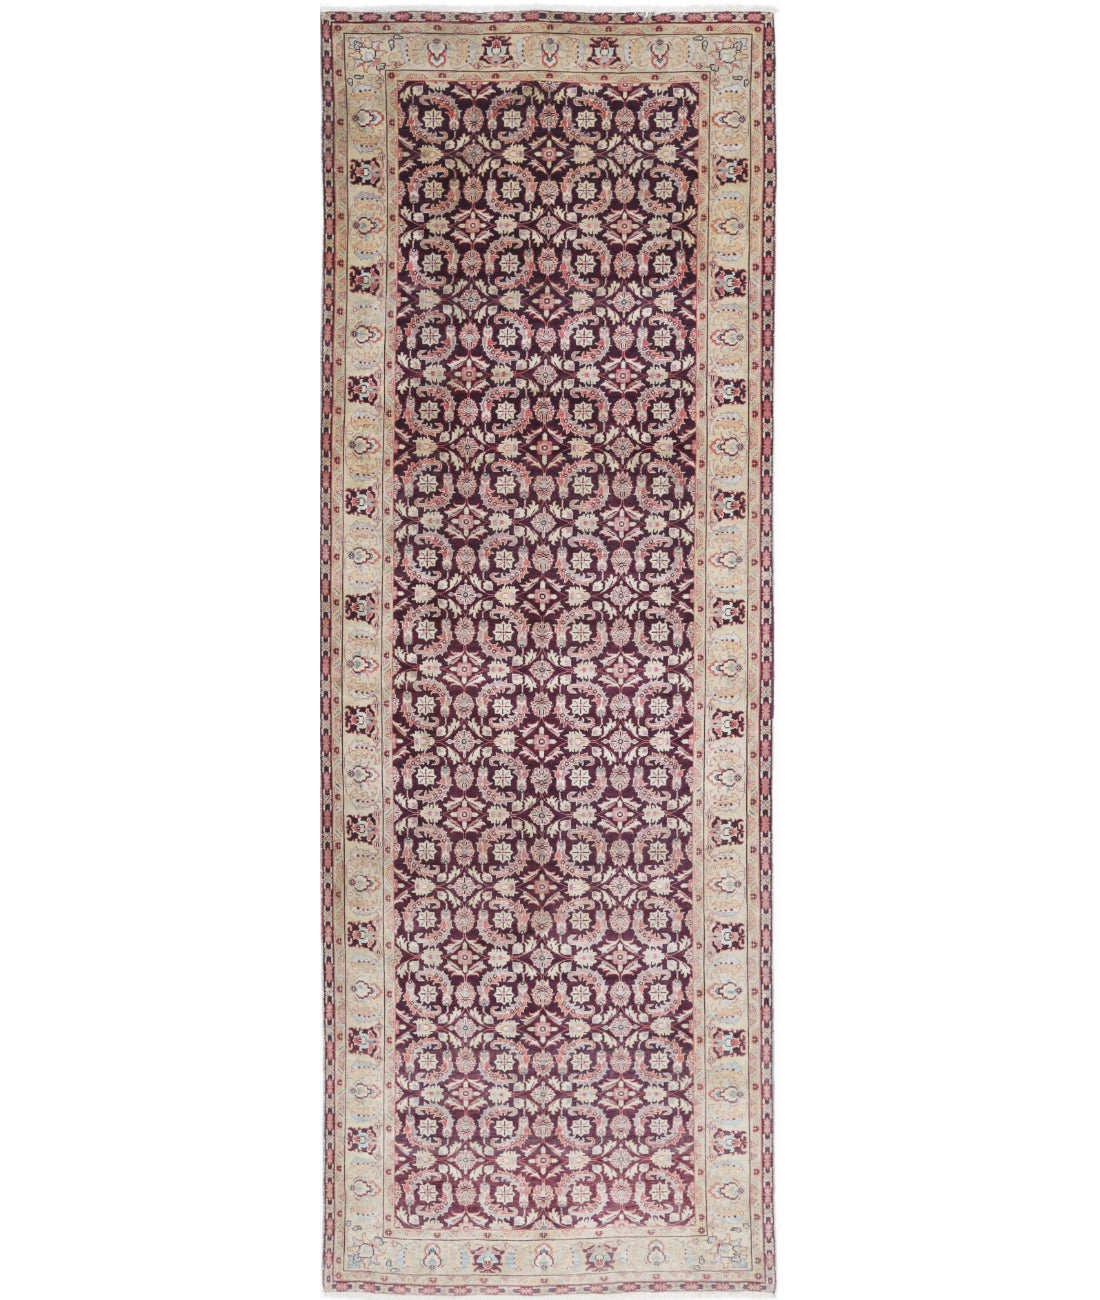 Hand Knotted Heritage Tabriz Wool Rug - 3'11'' x 11'11'' 3'11'' x 11'11'' (188 X 288) / Beige / Brown